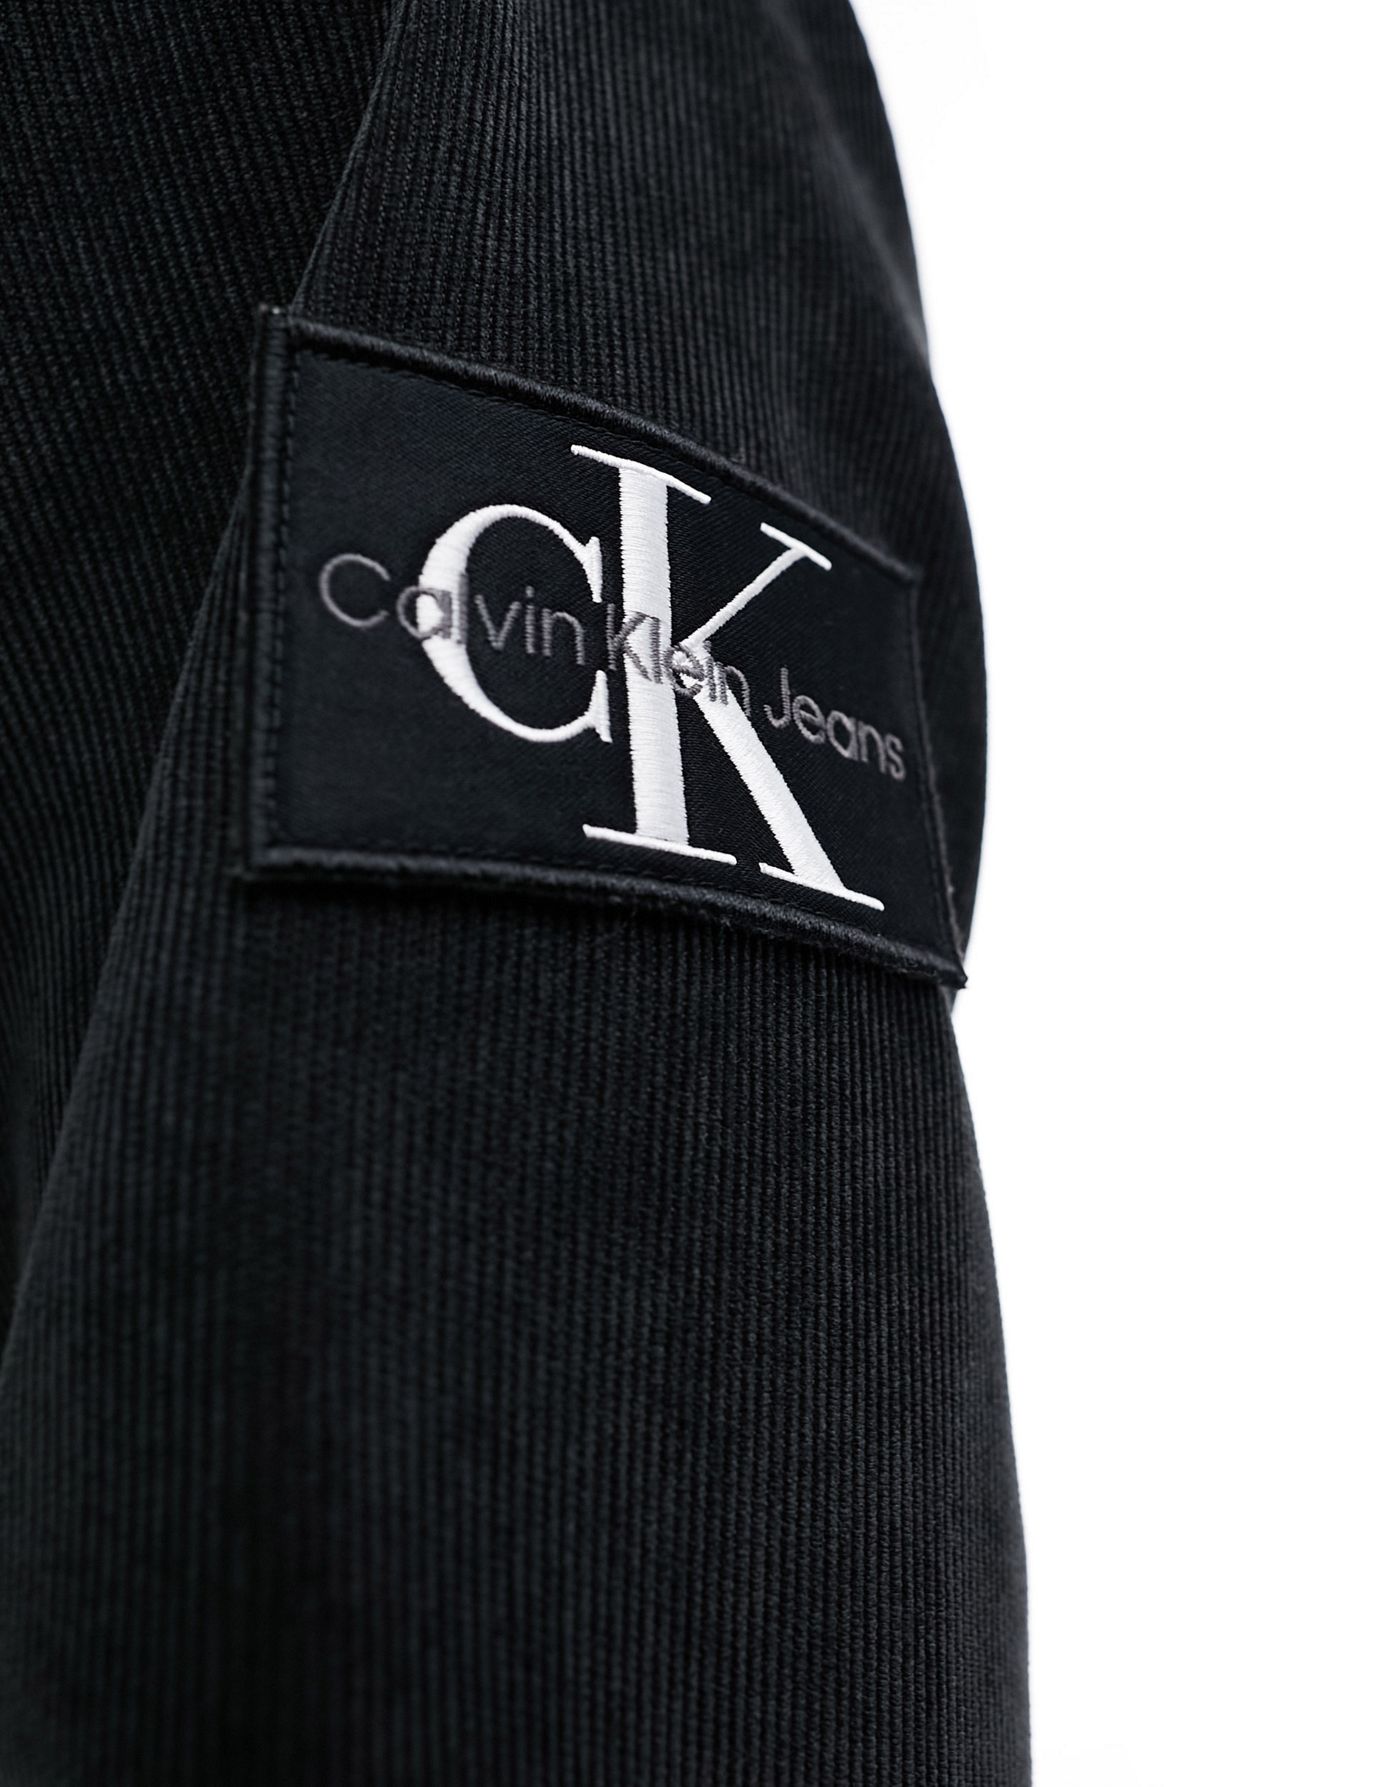 Calvin Klein Jeans regular fit corduroy shirt in black